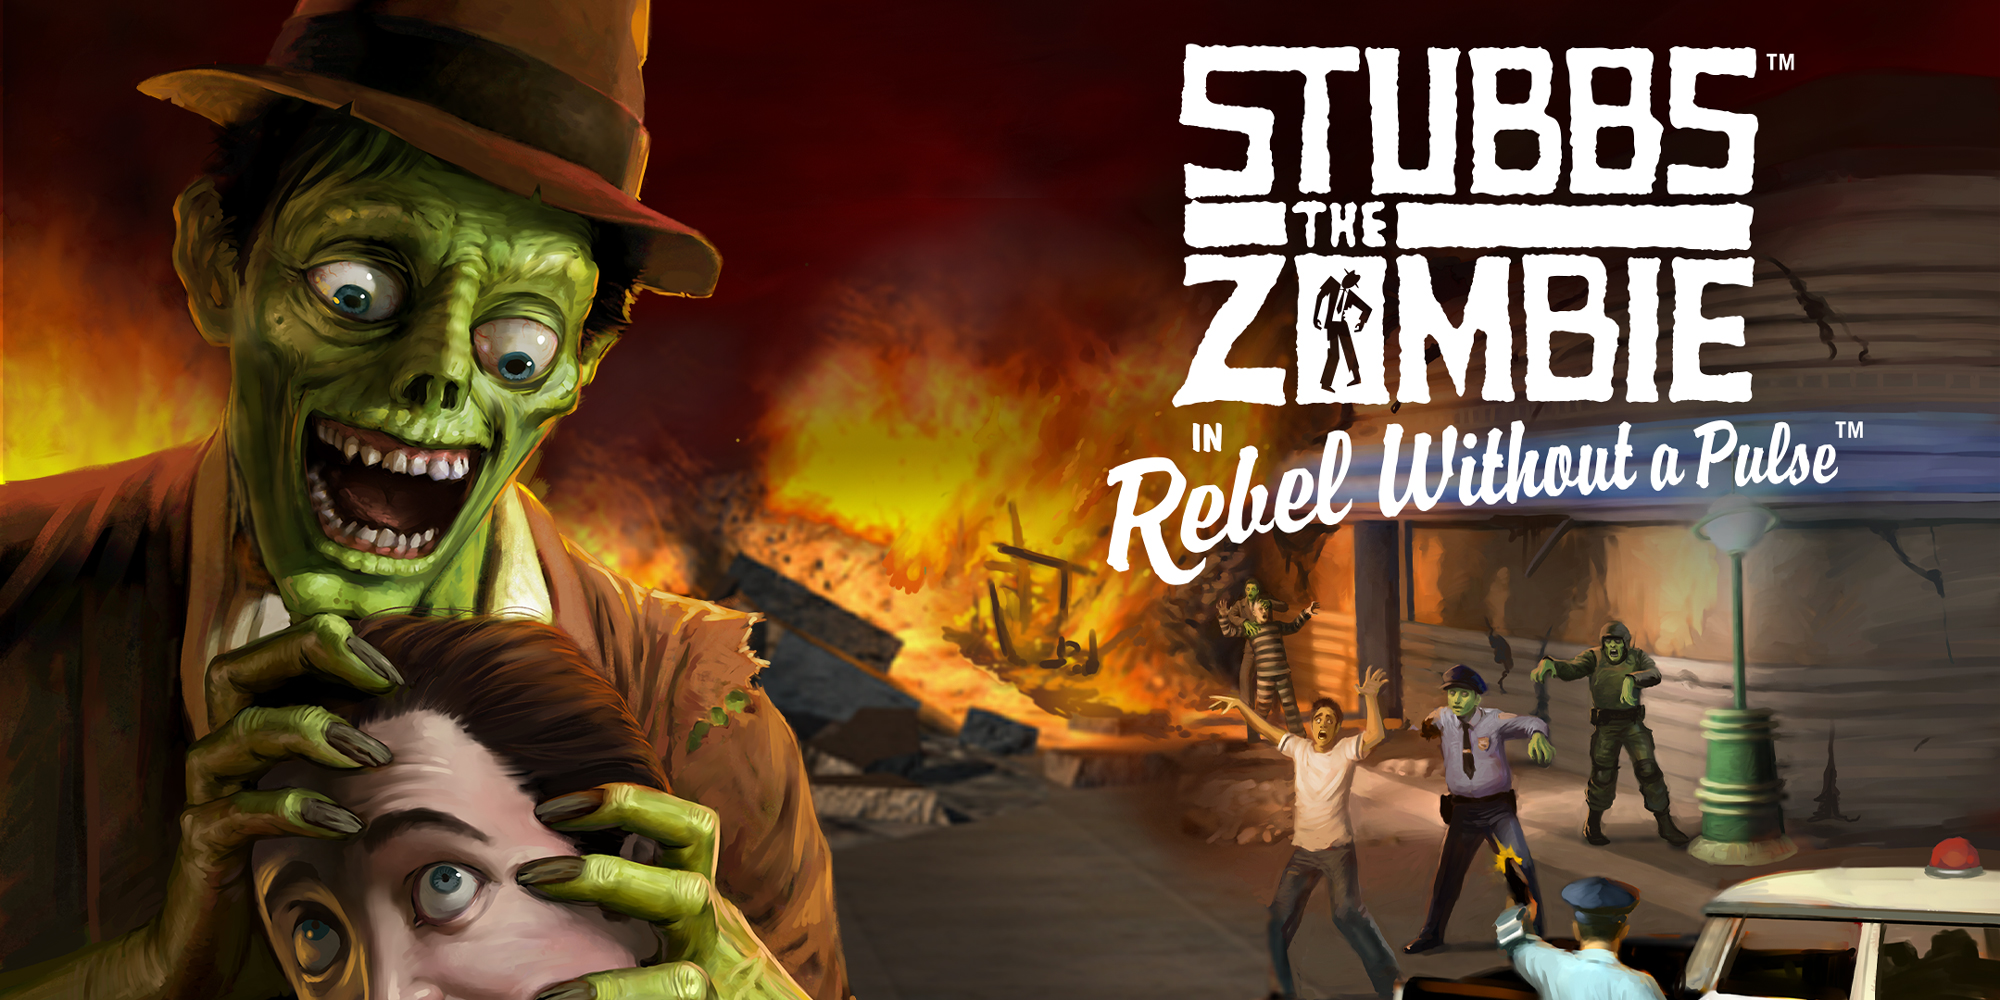 Resultado de imagem para stubbs the zombie in rebel without a pulse nintendo switch